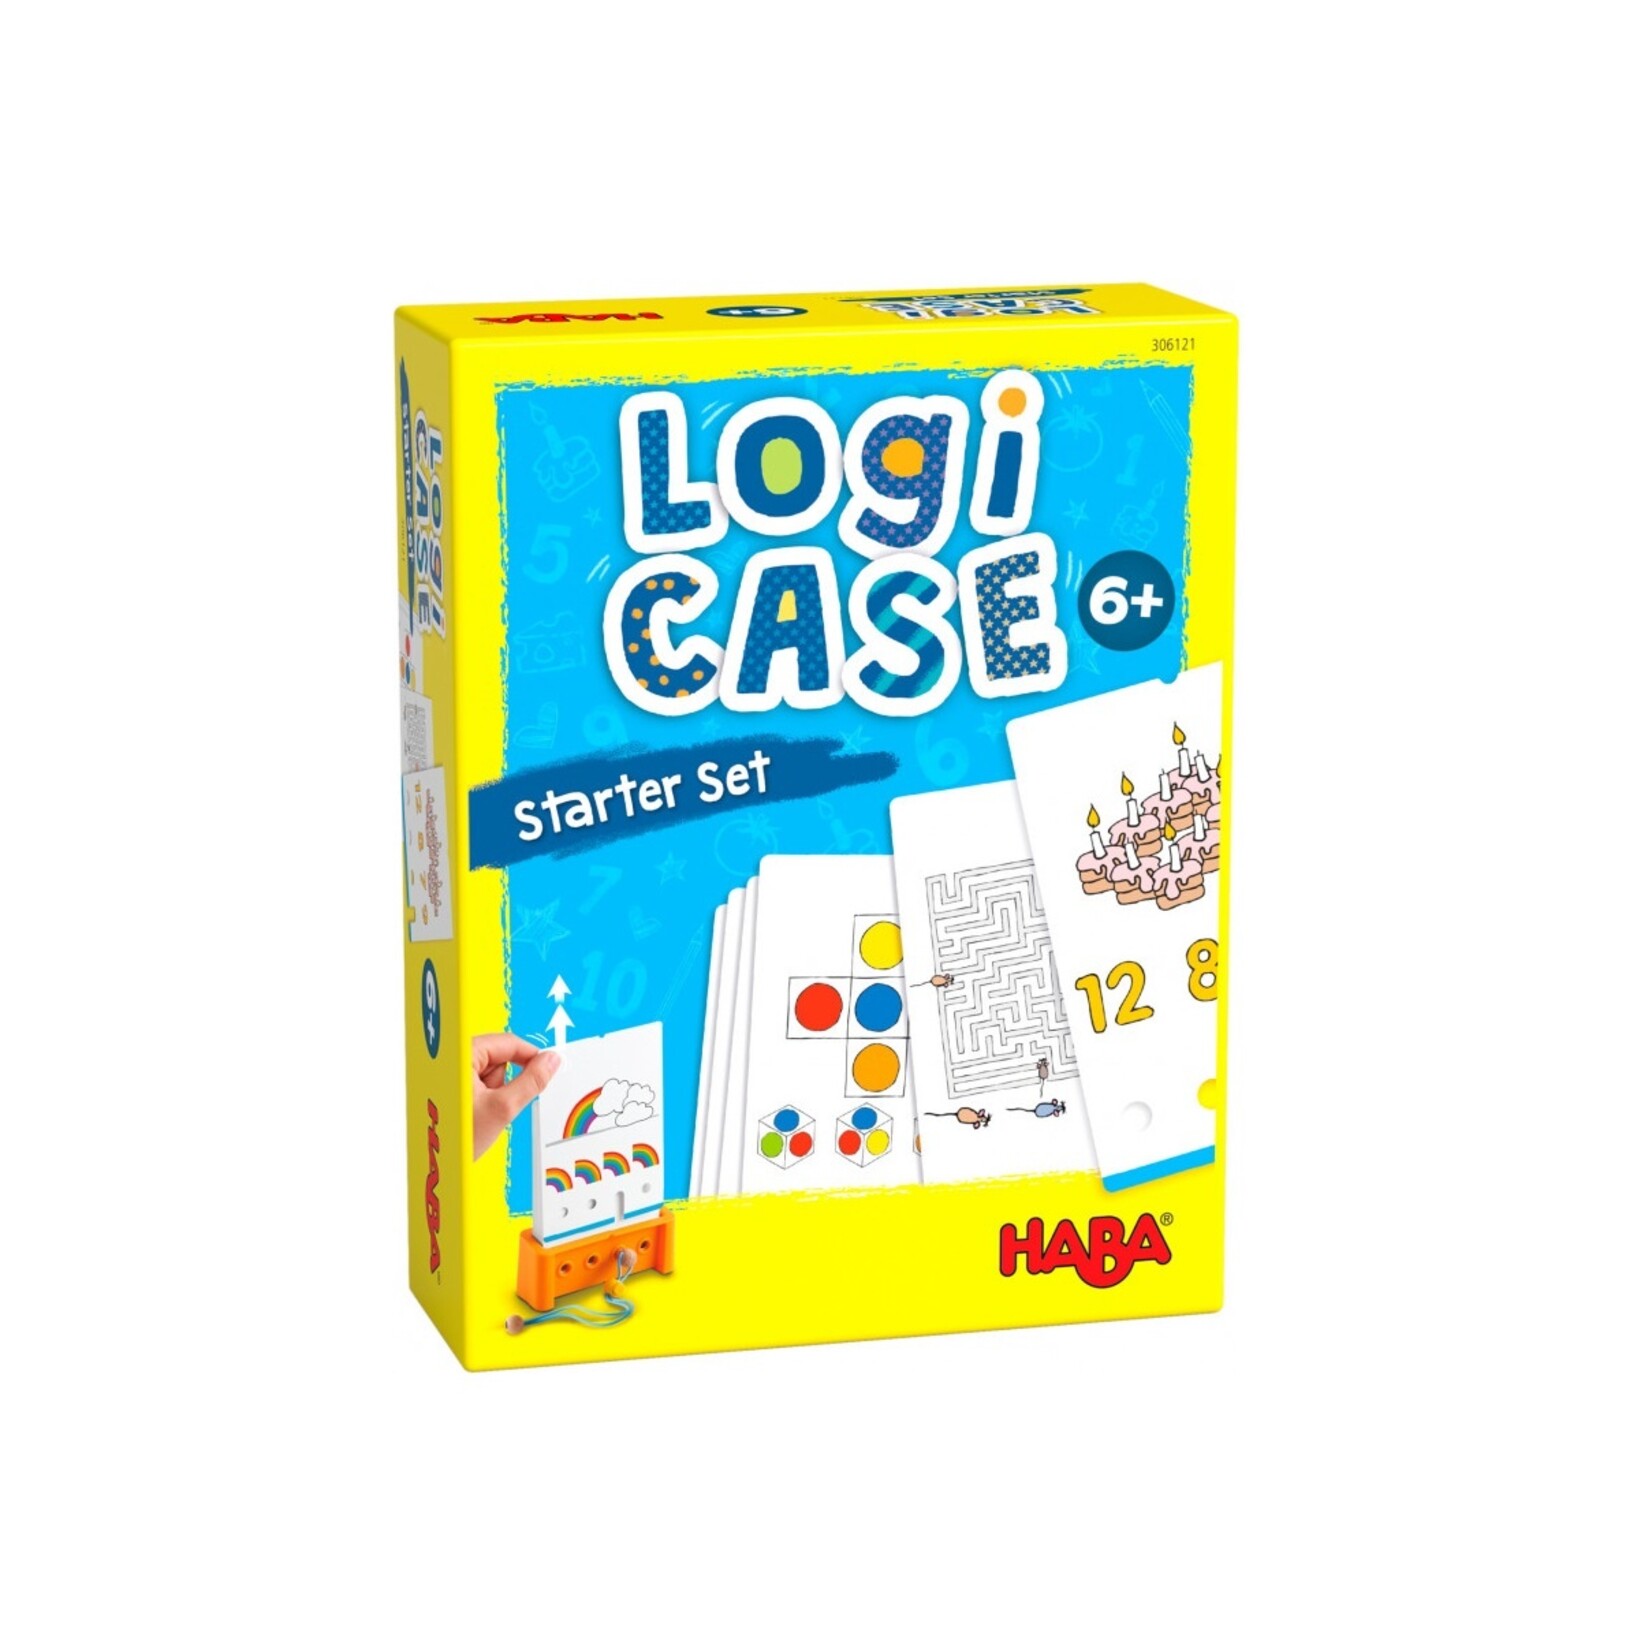 Haba Logic! Case starter 6+ (Multilingue)